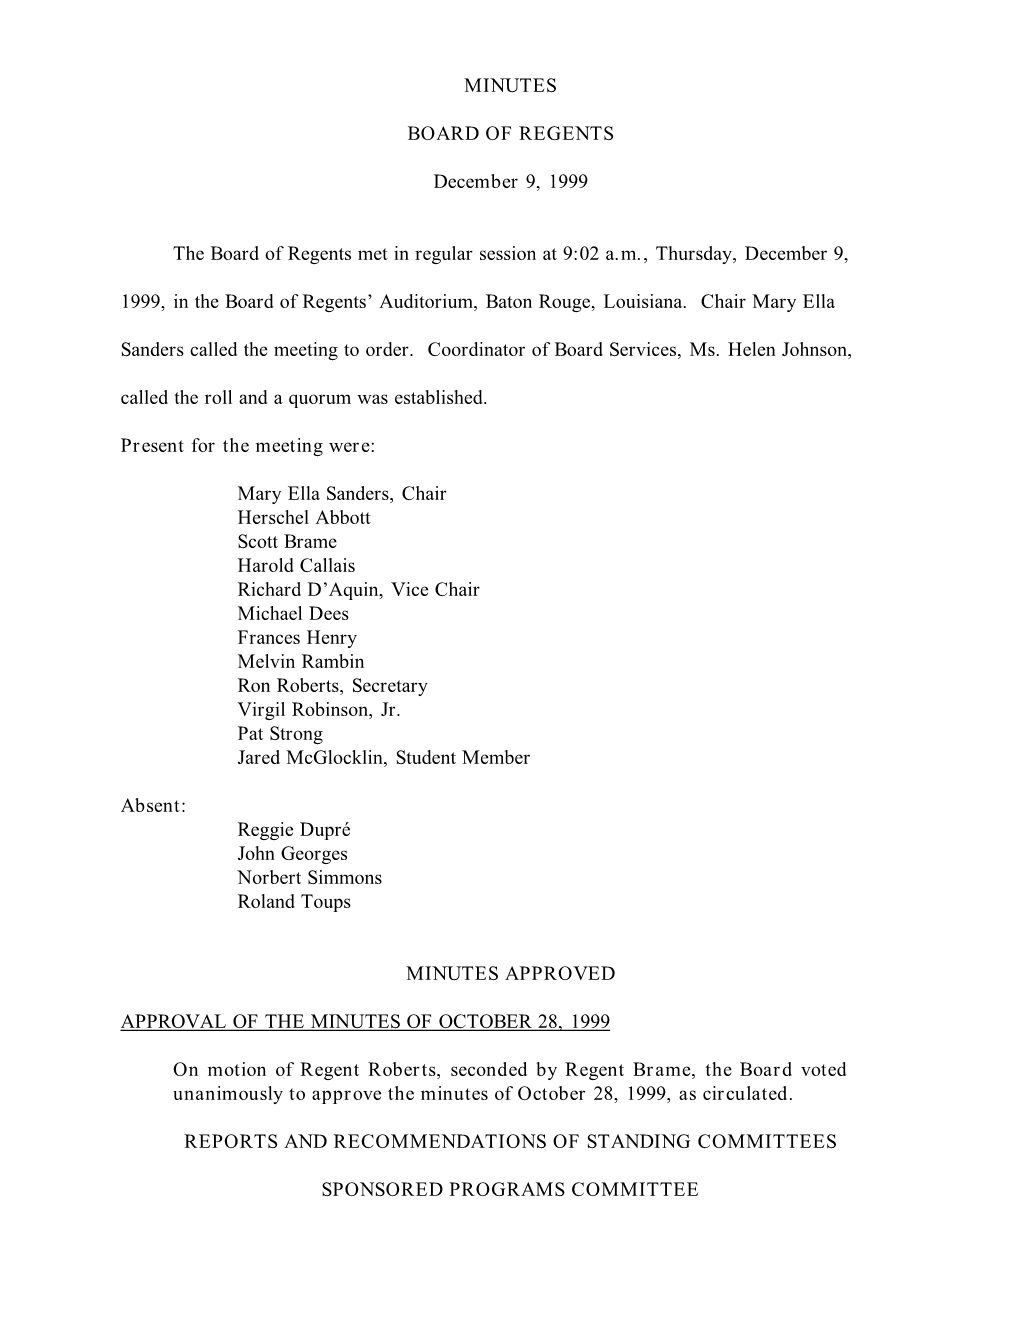 Louisiana Board of Regents Minutes of December 9, 1999